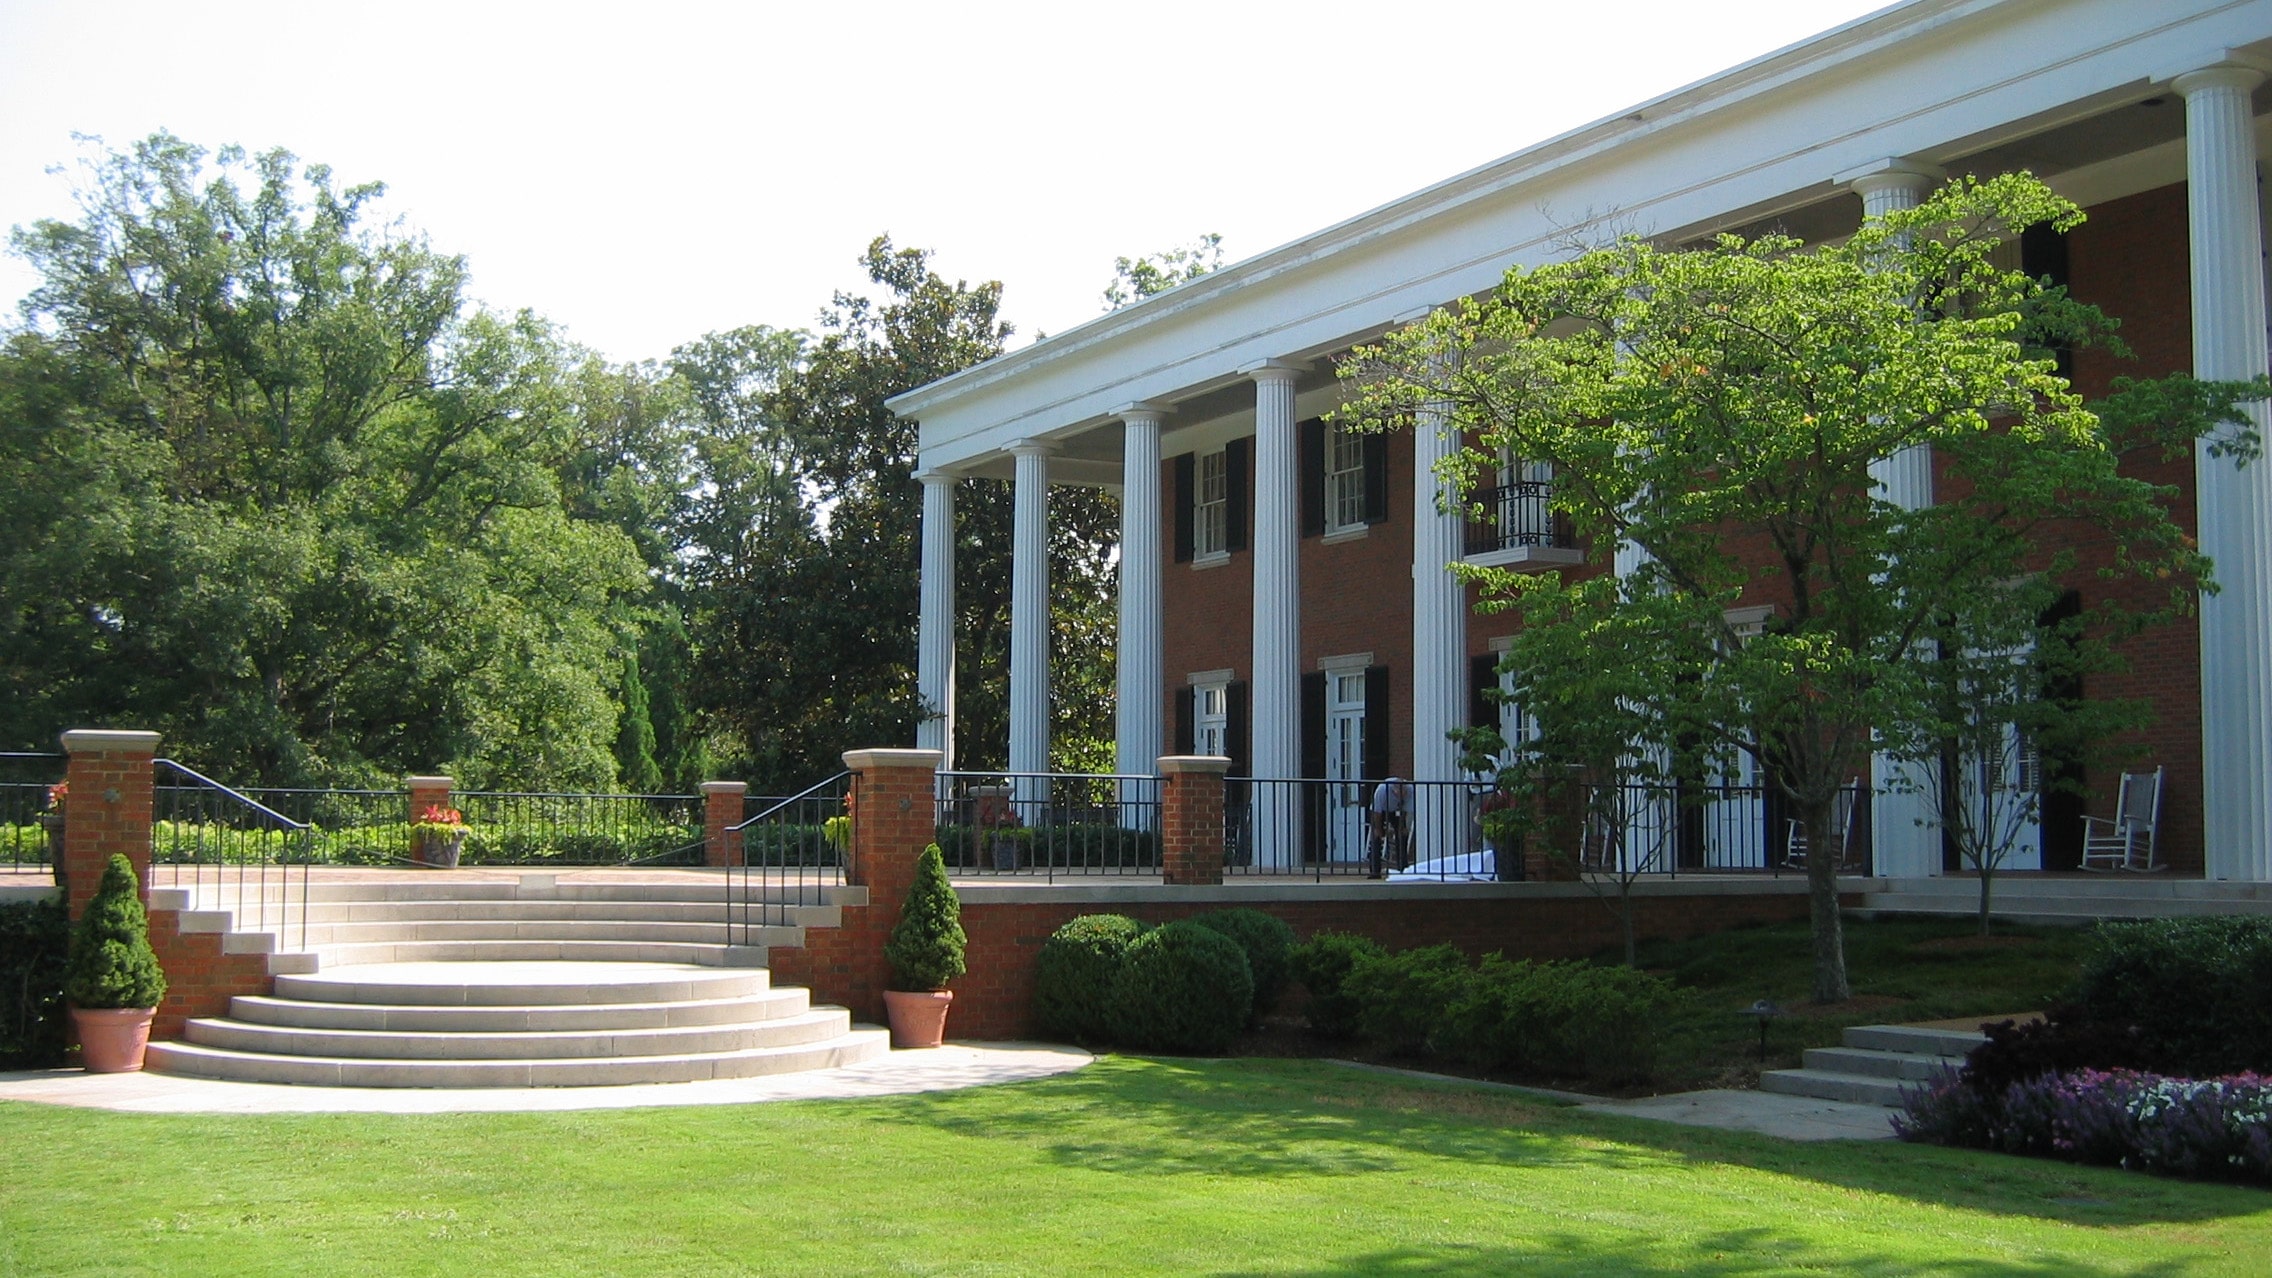 Georgia Governor's Mansion